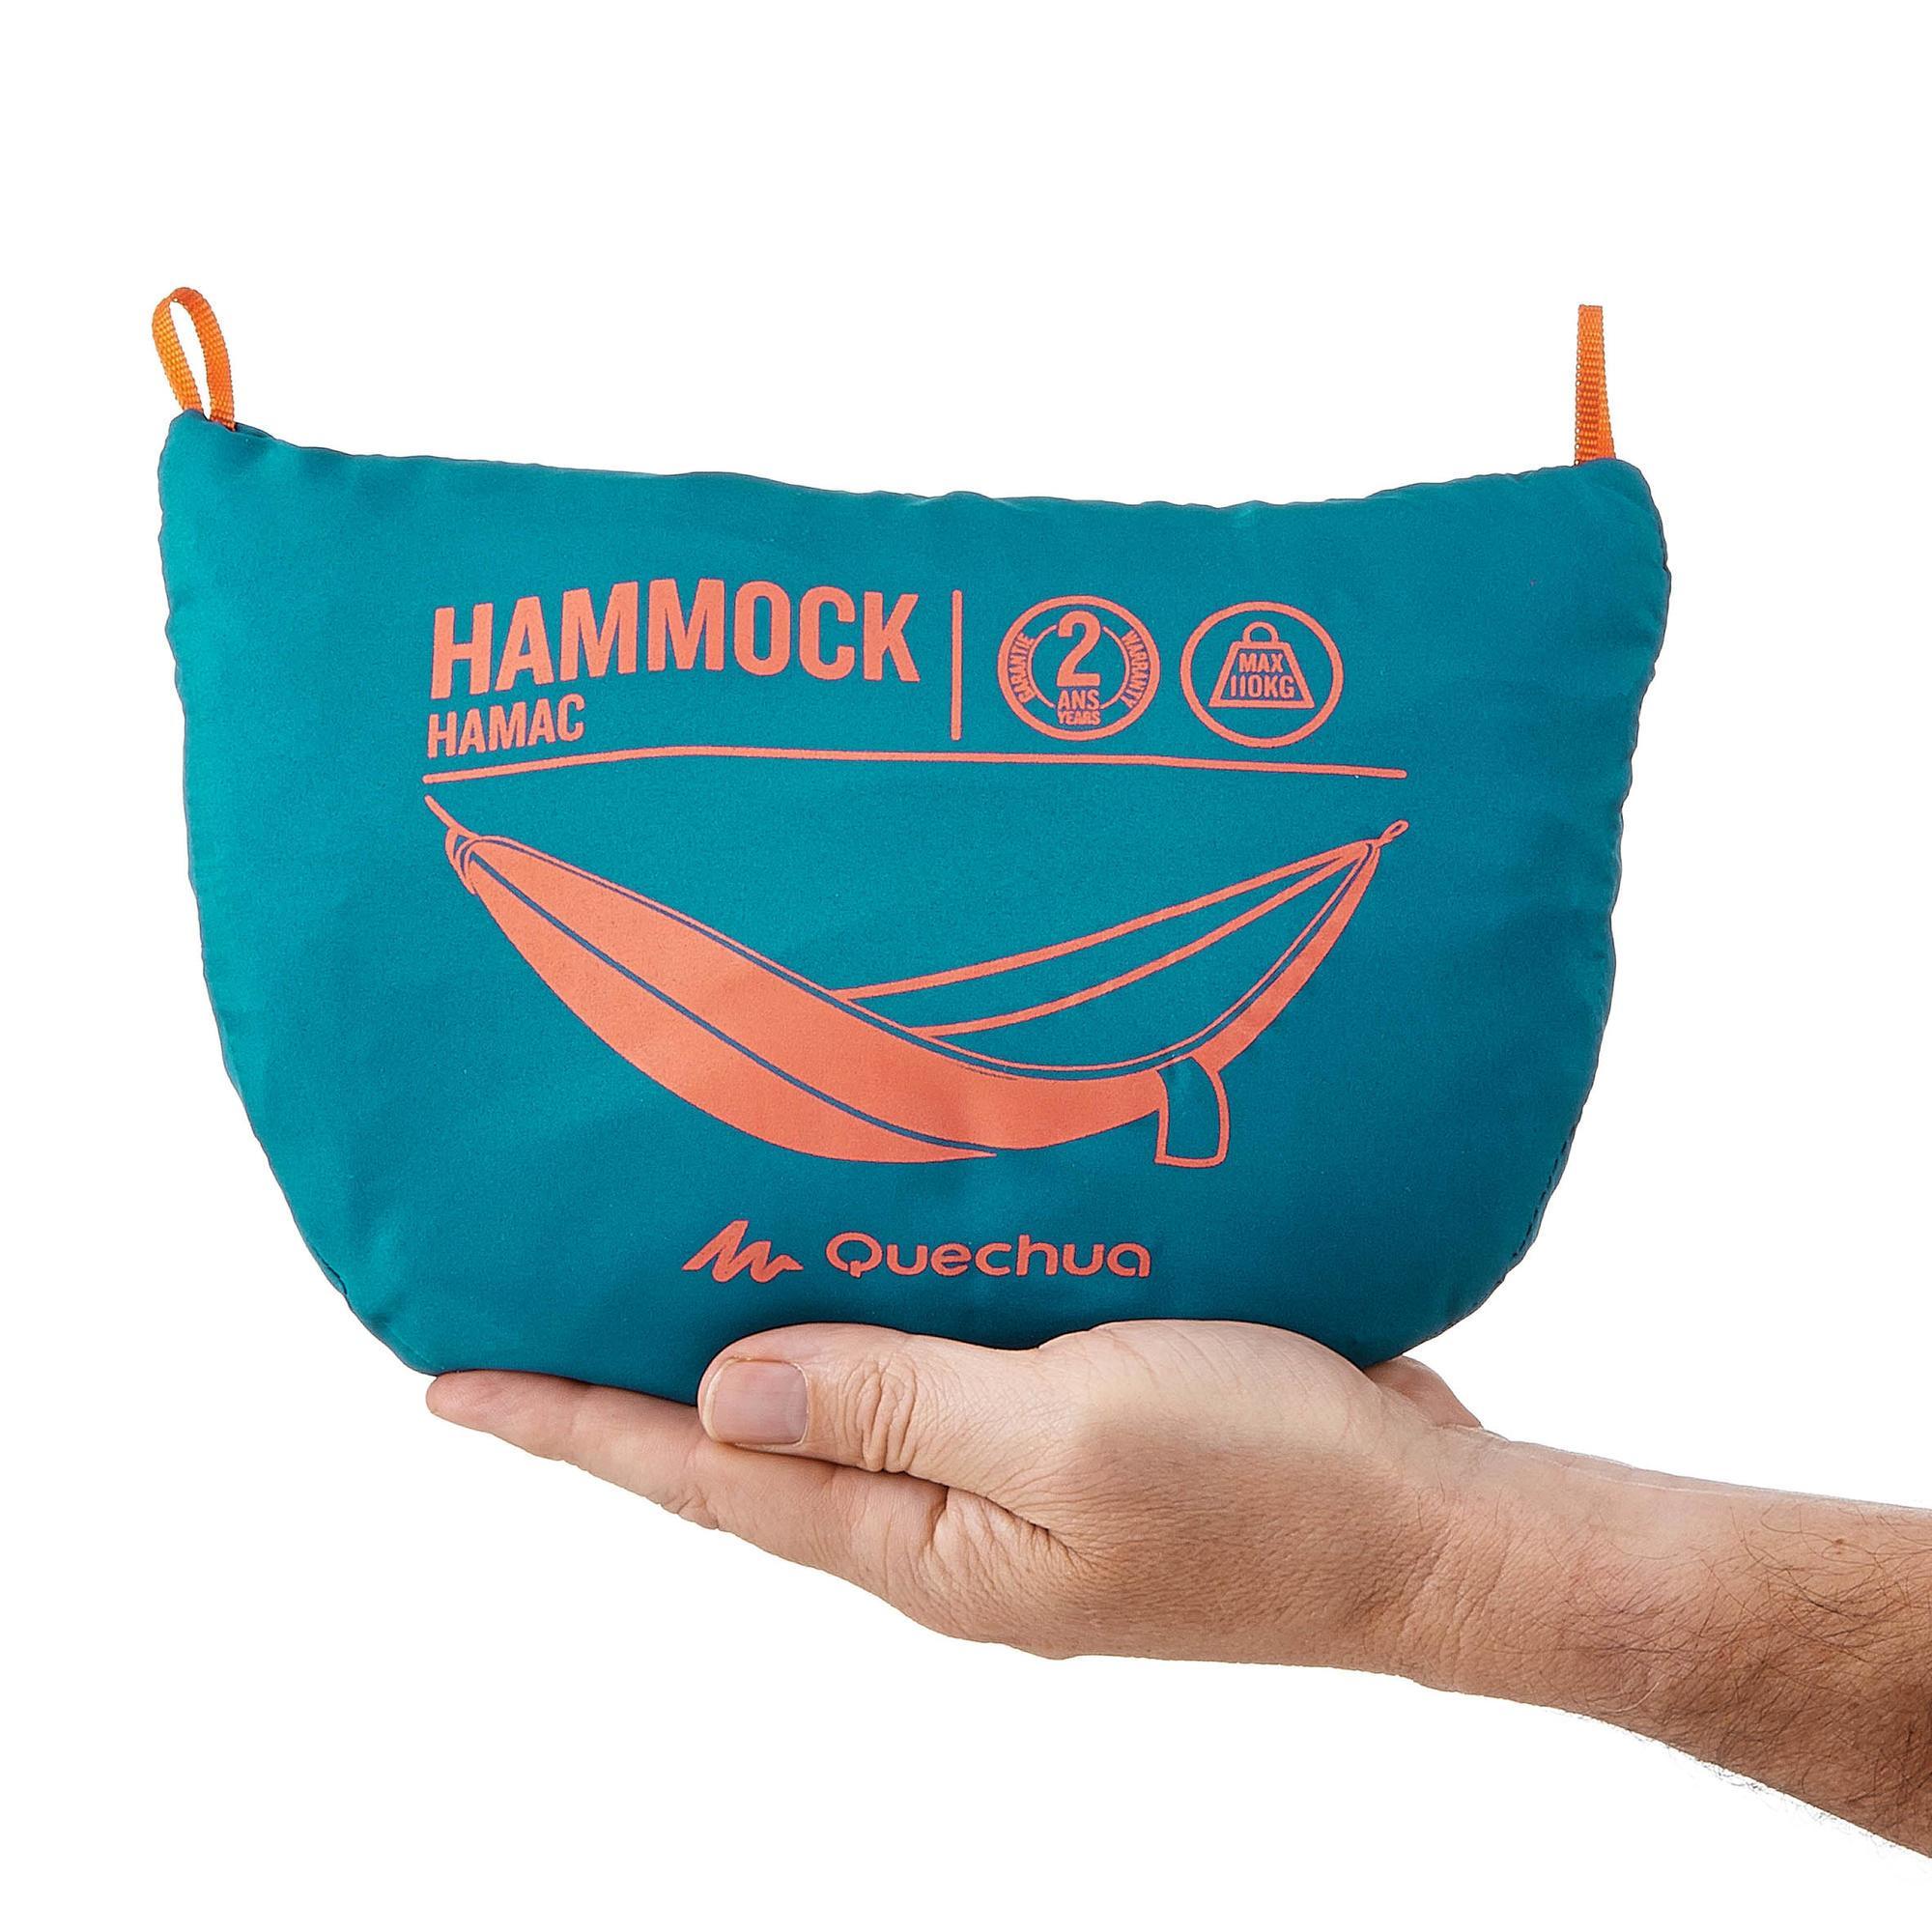 Single hammock - Basic 260 x 152 cm - 1 